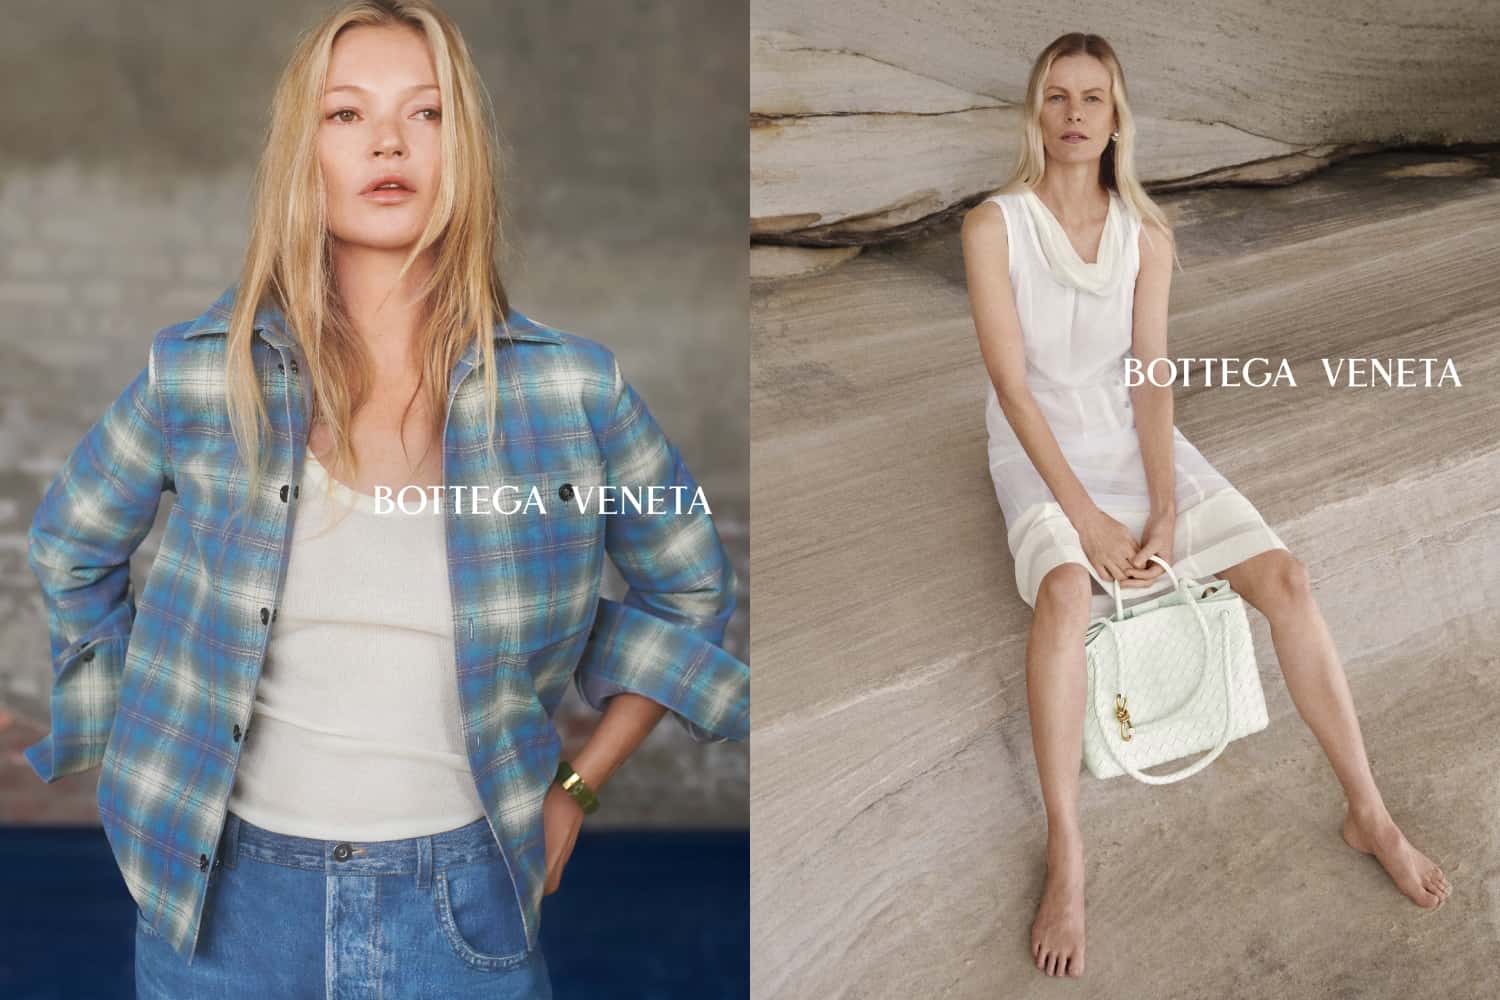 What's Next for Bottega Veneta?